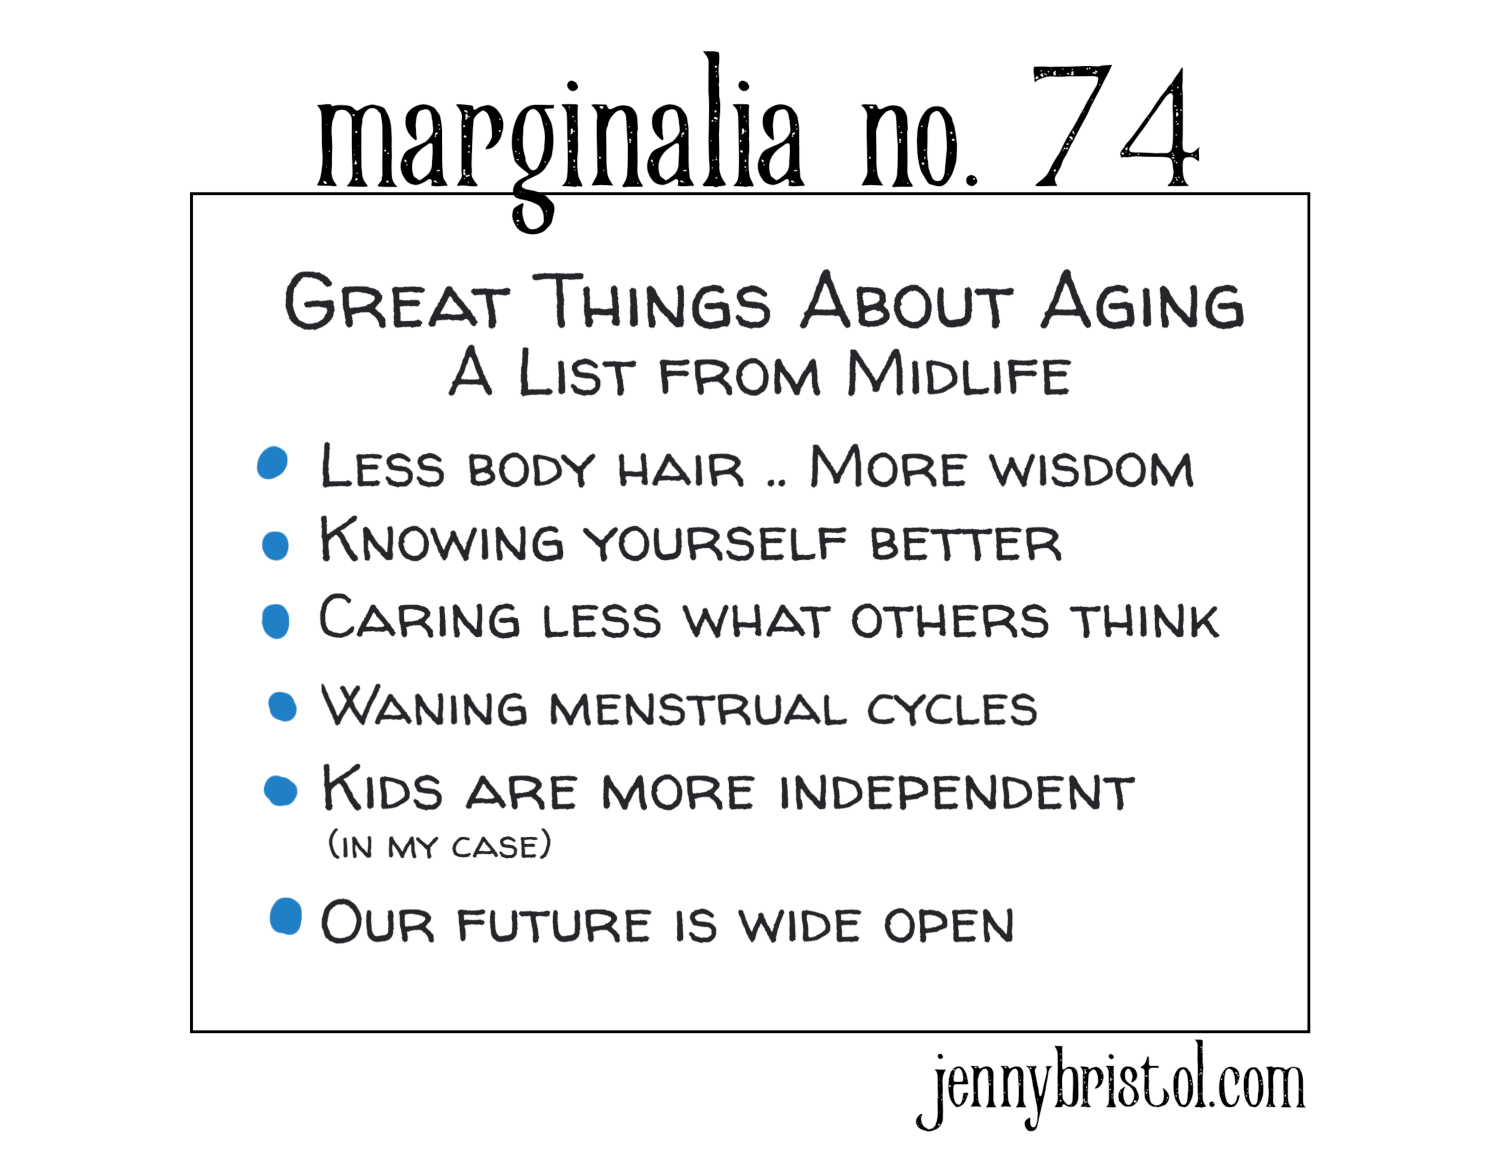 Marginalia No. 74 to post